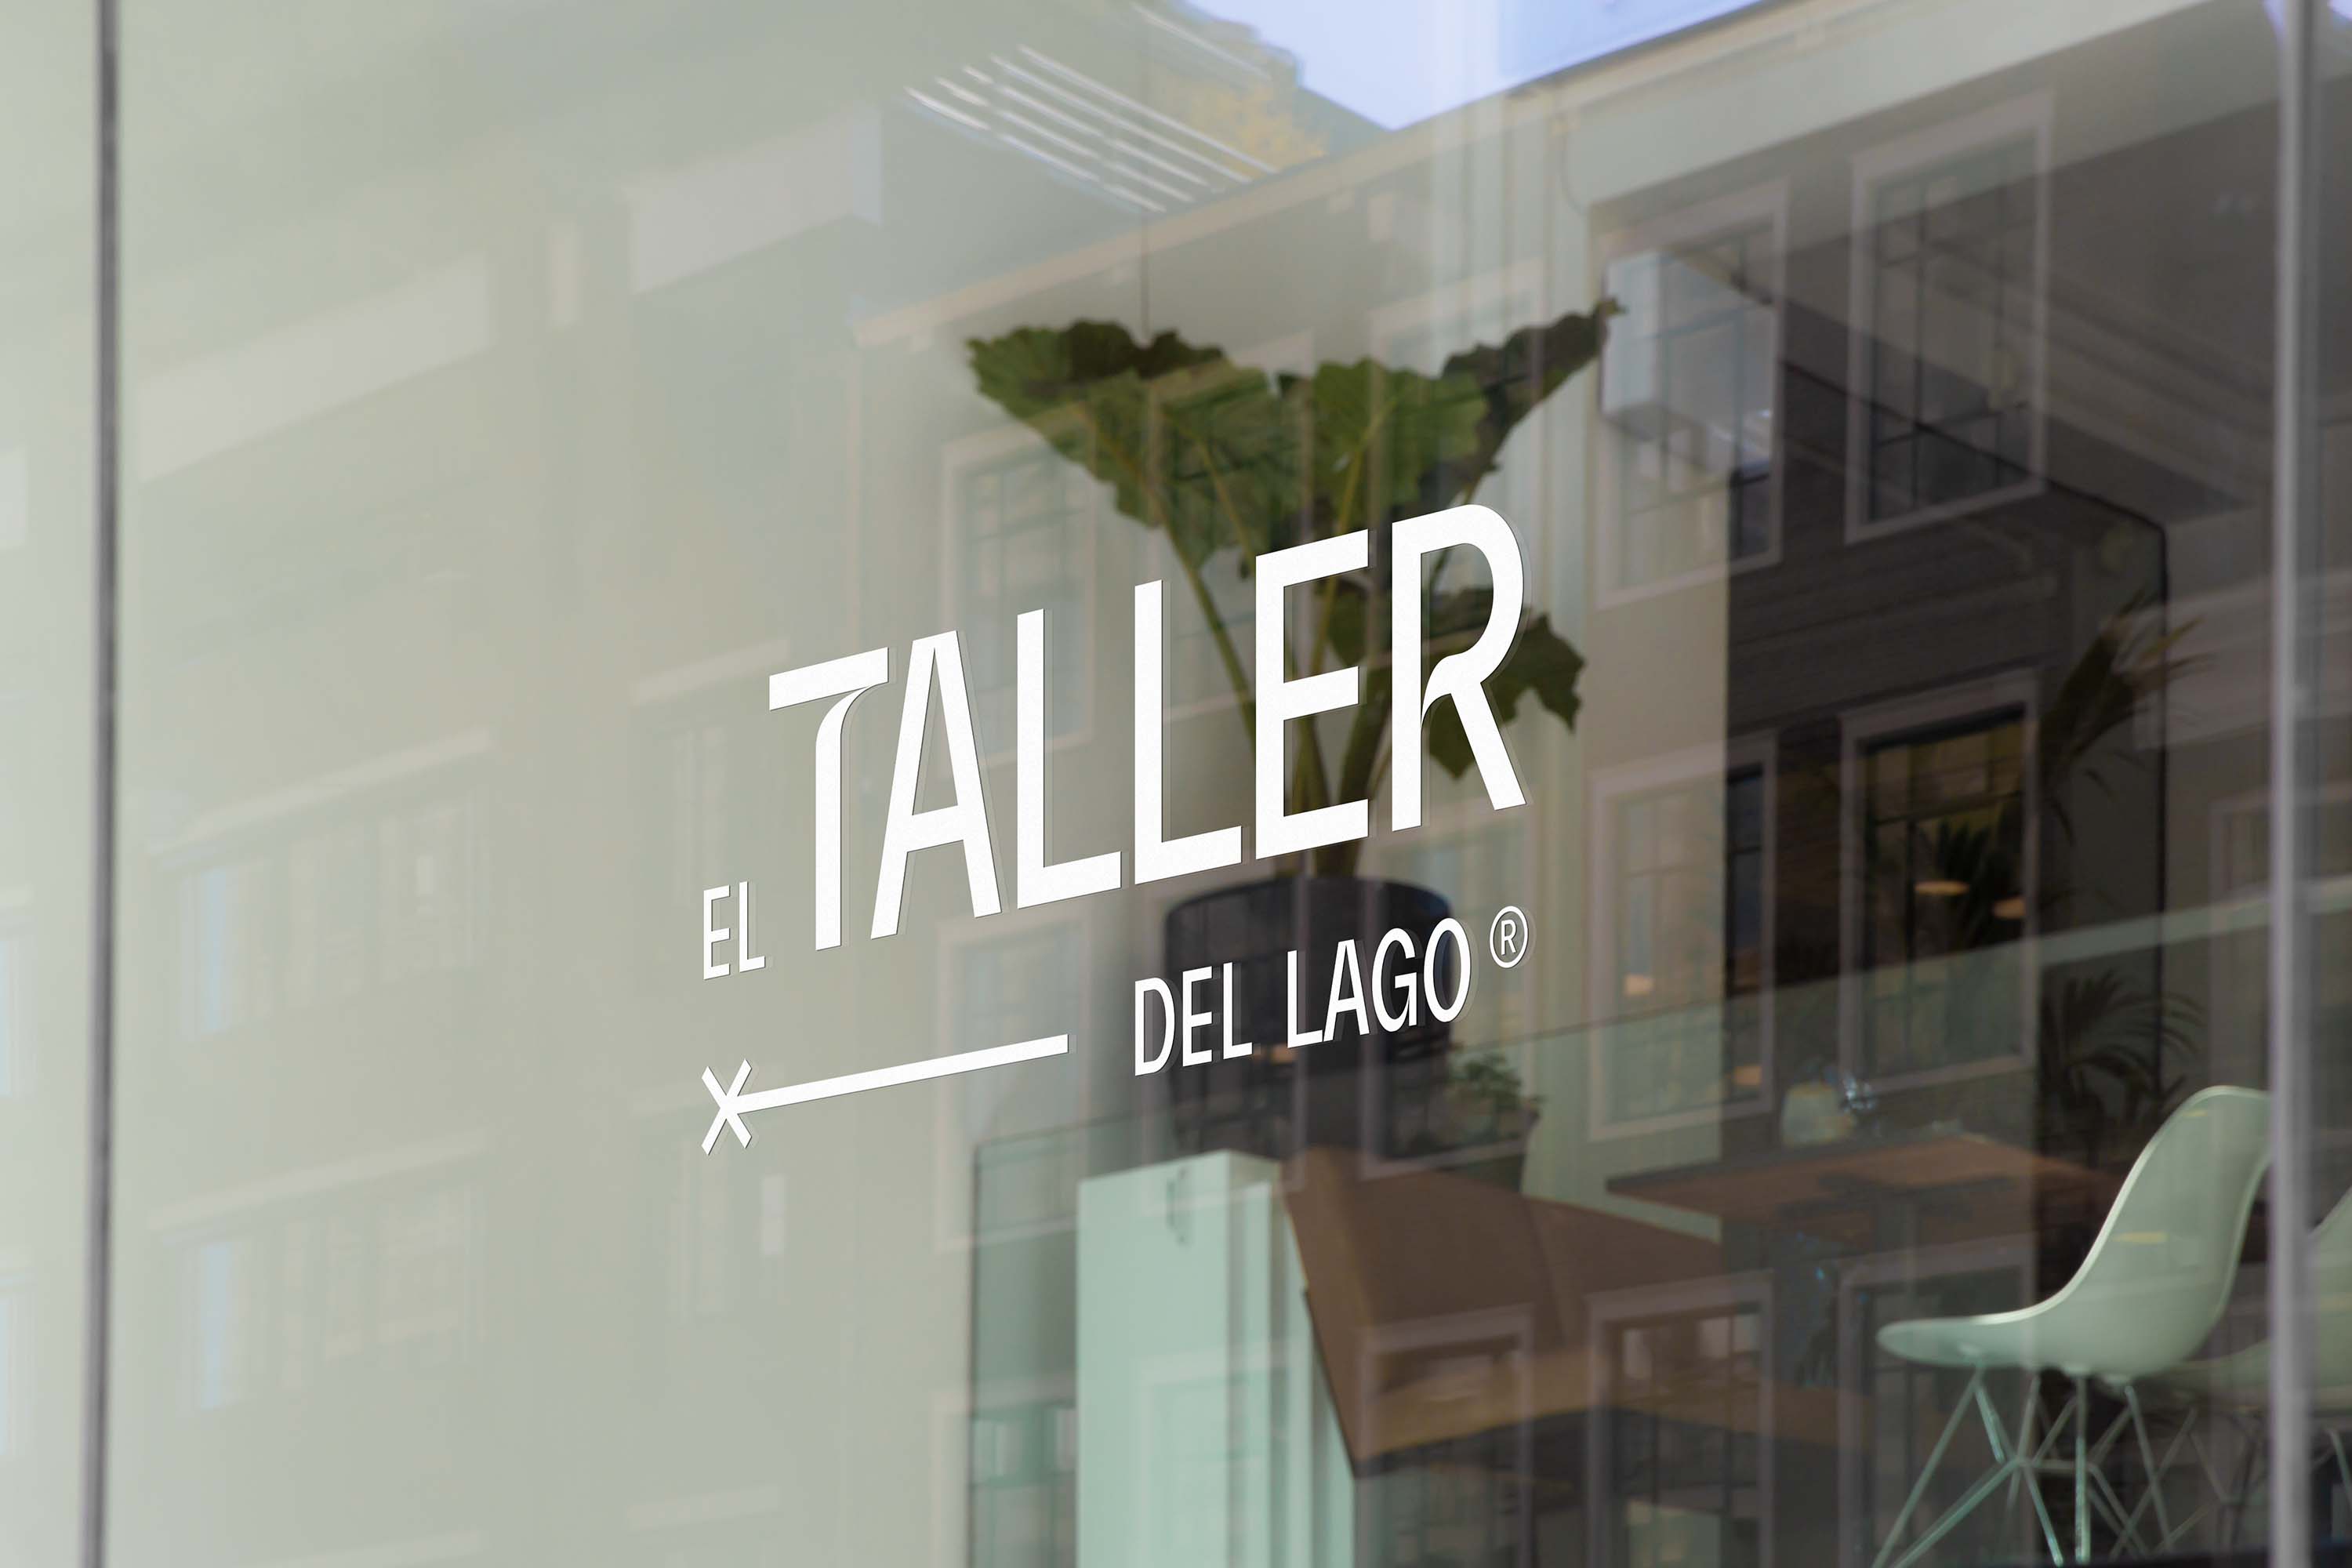 El Taller  by Wanna - Creative Work